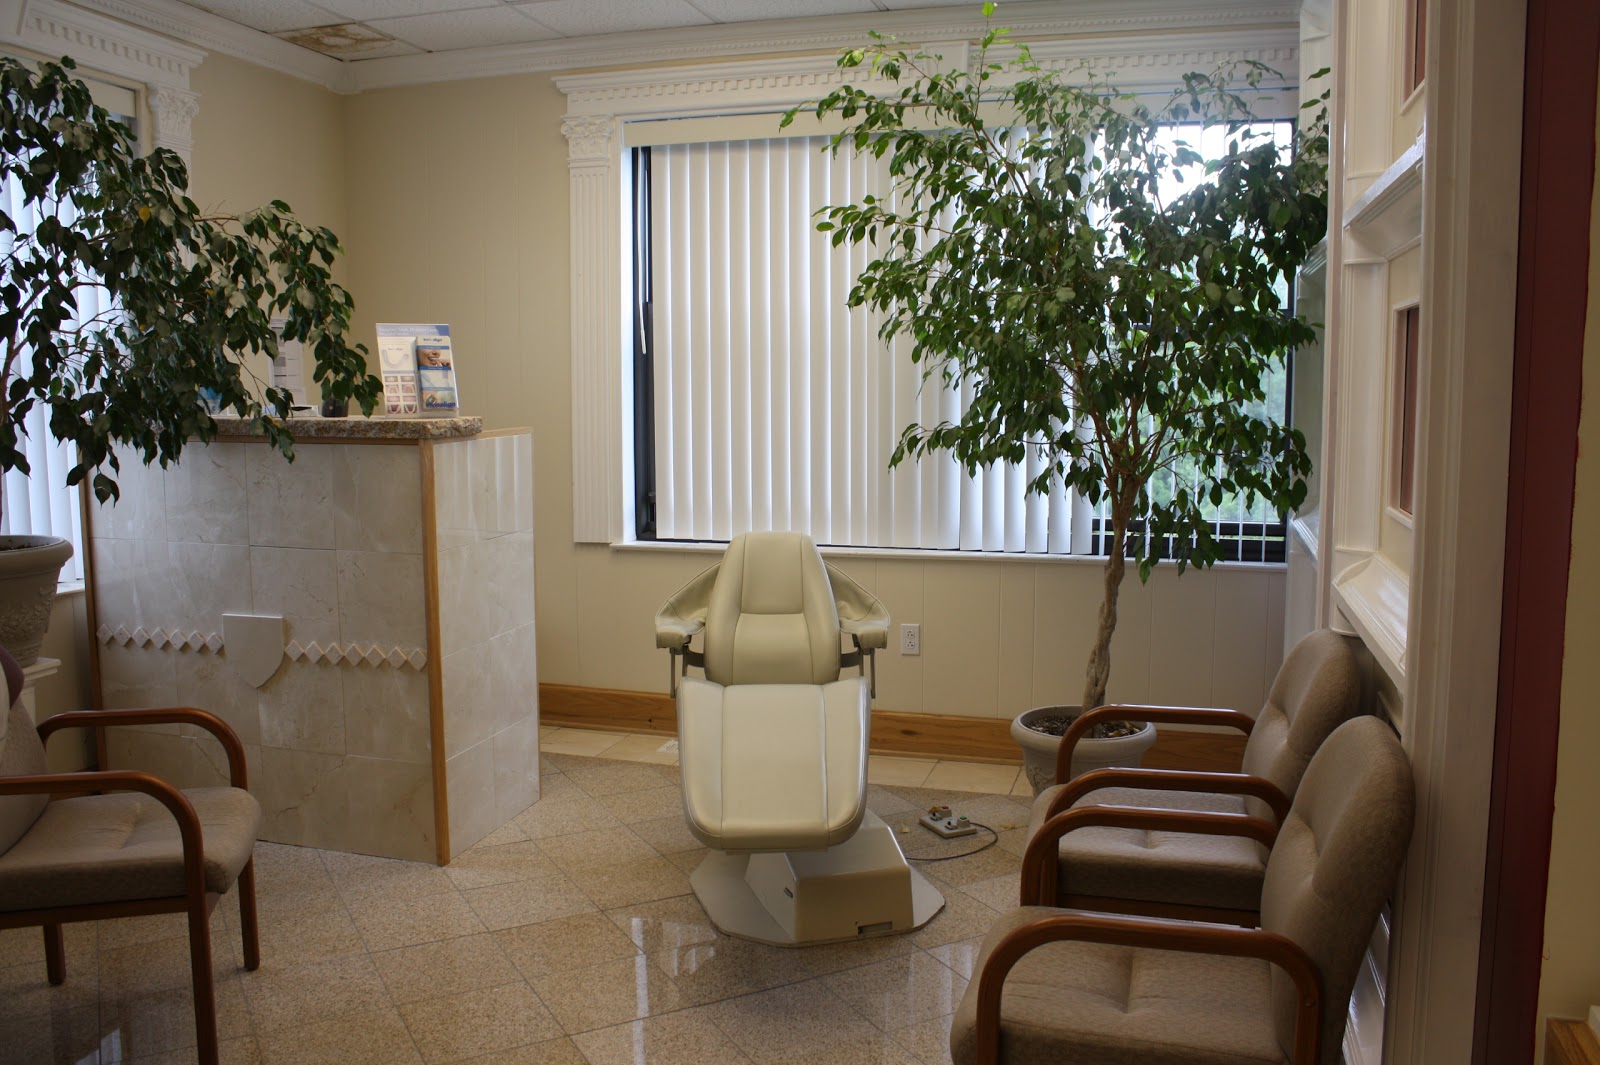 Photo of LeBlanc Orthodontics in Larchmont City, New York, United States - 2 Picture of Point of interest, Establishment, Health, Dentist